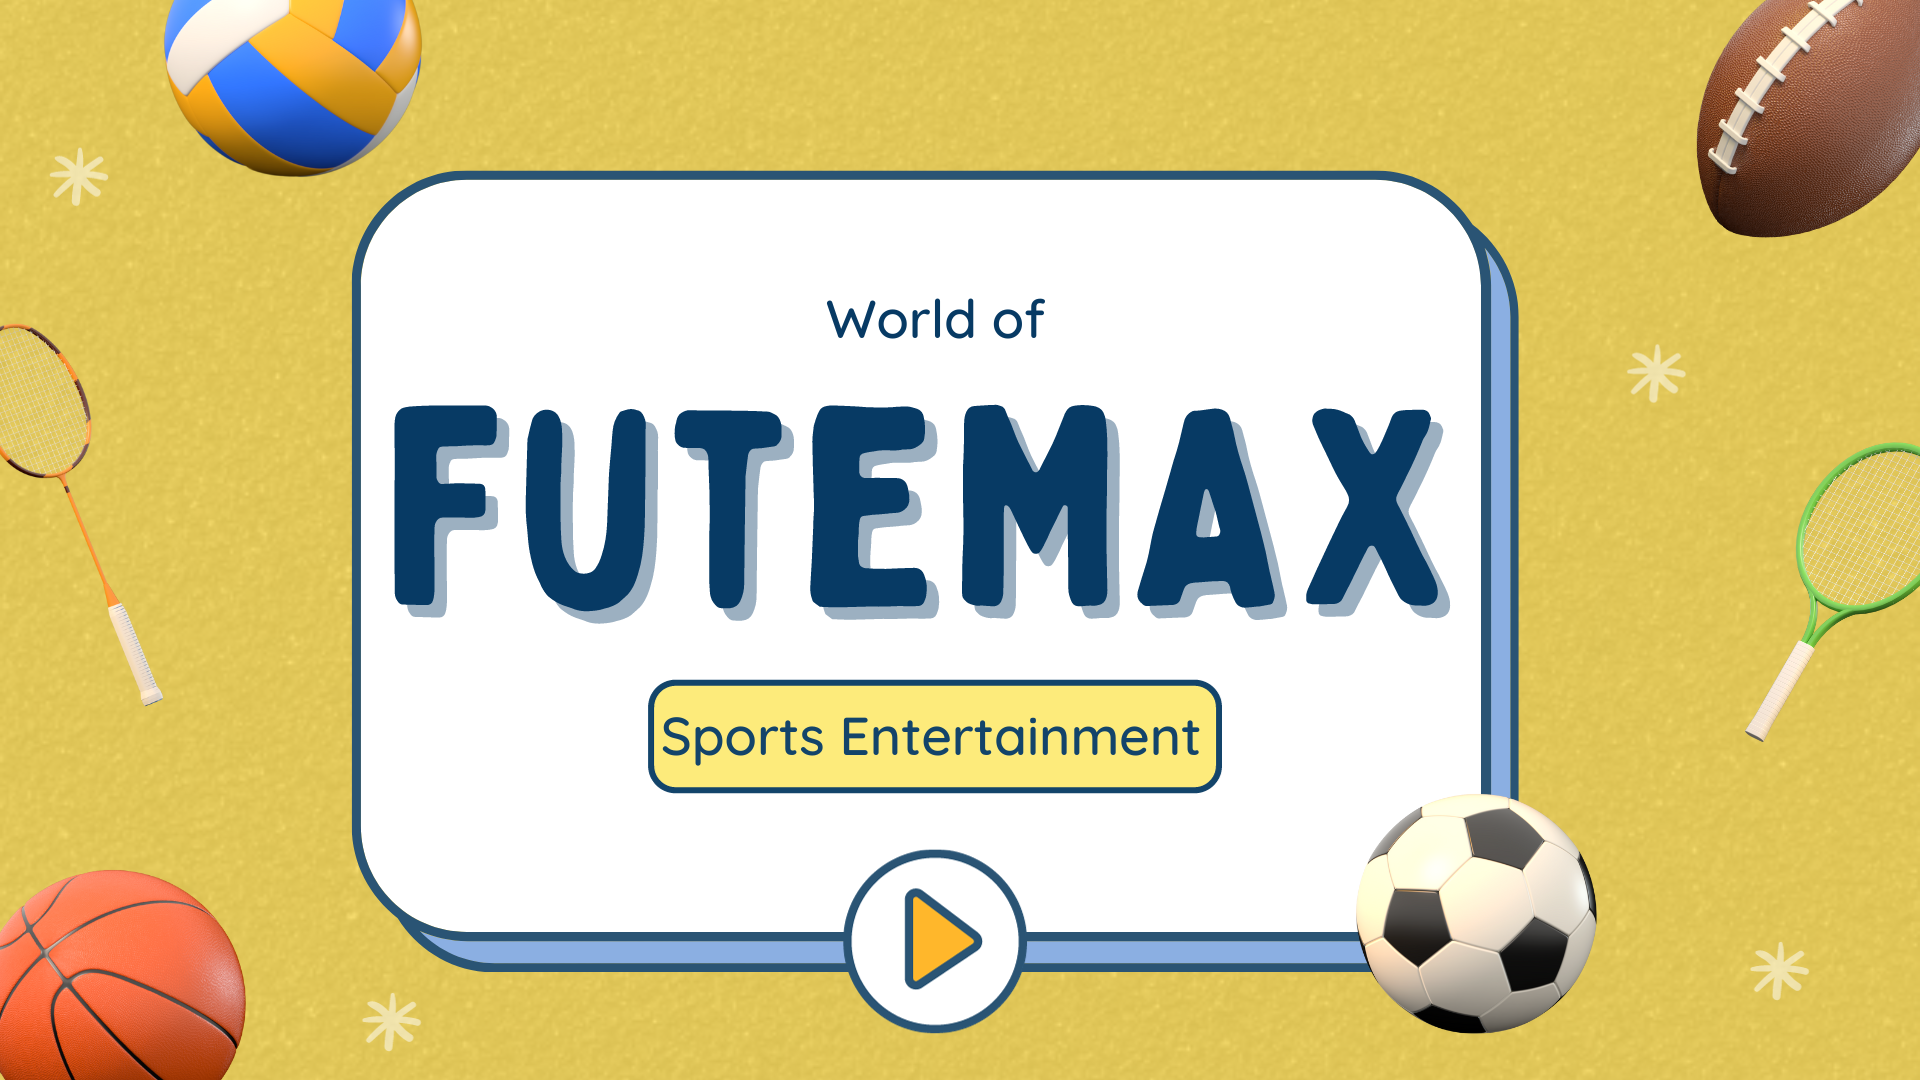 FuteMAX: FuteMAX in the World of Sports Entertainment